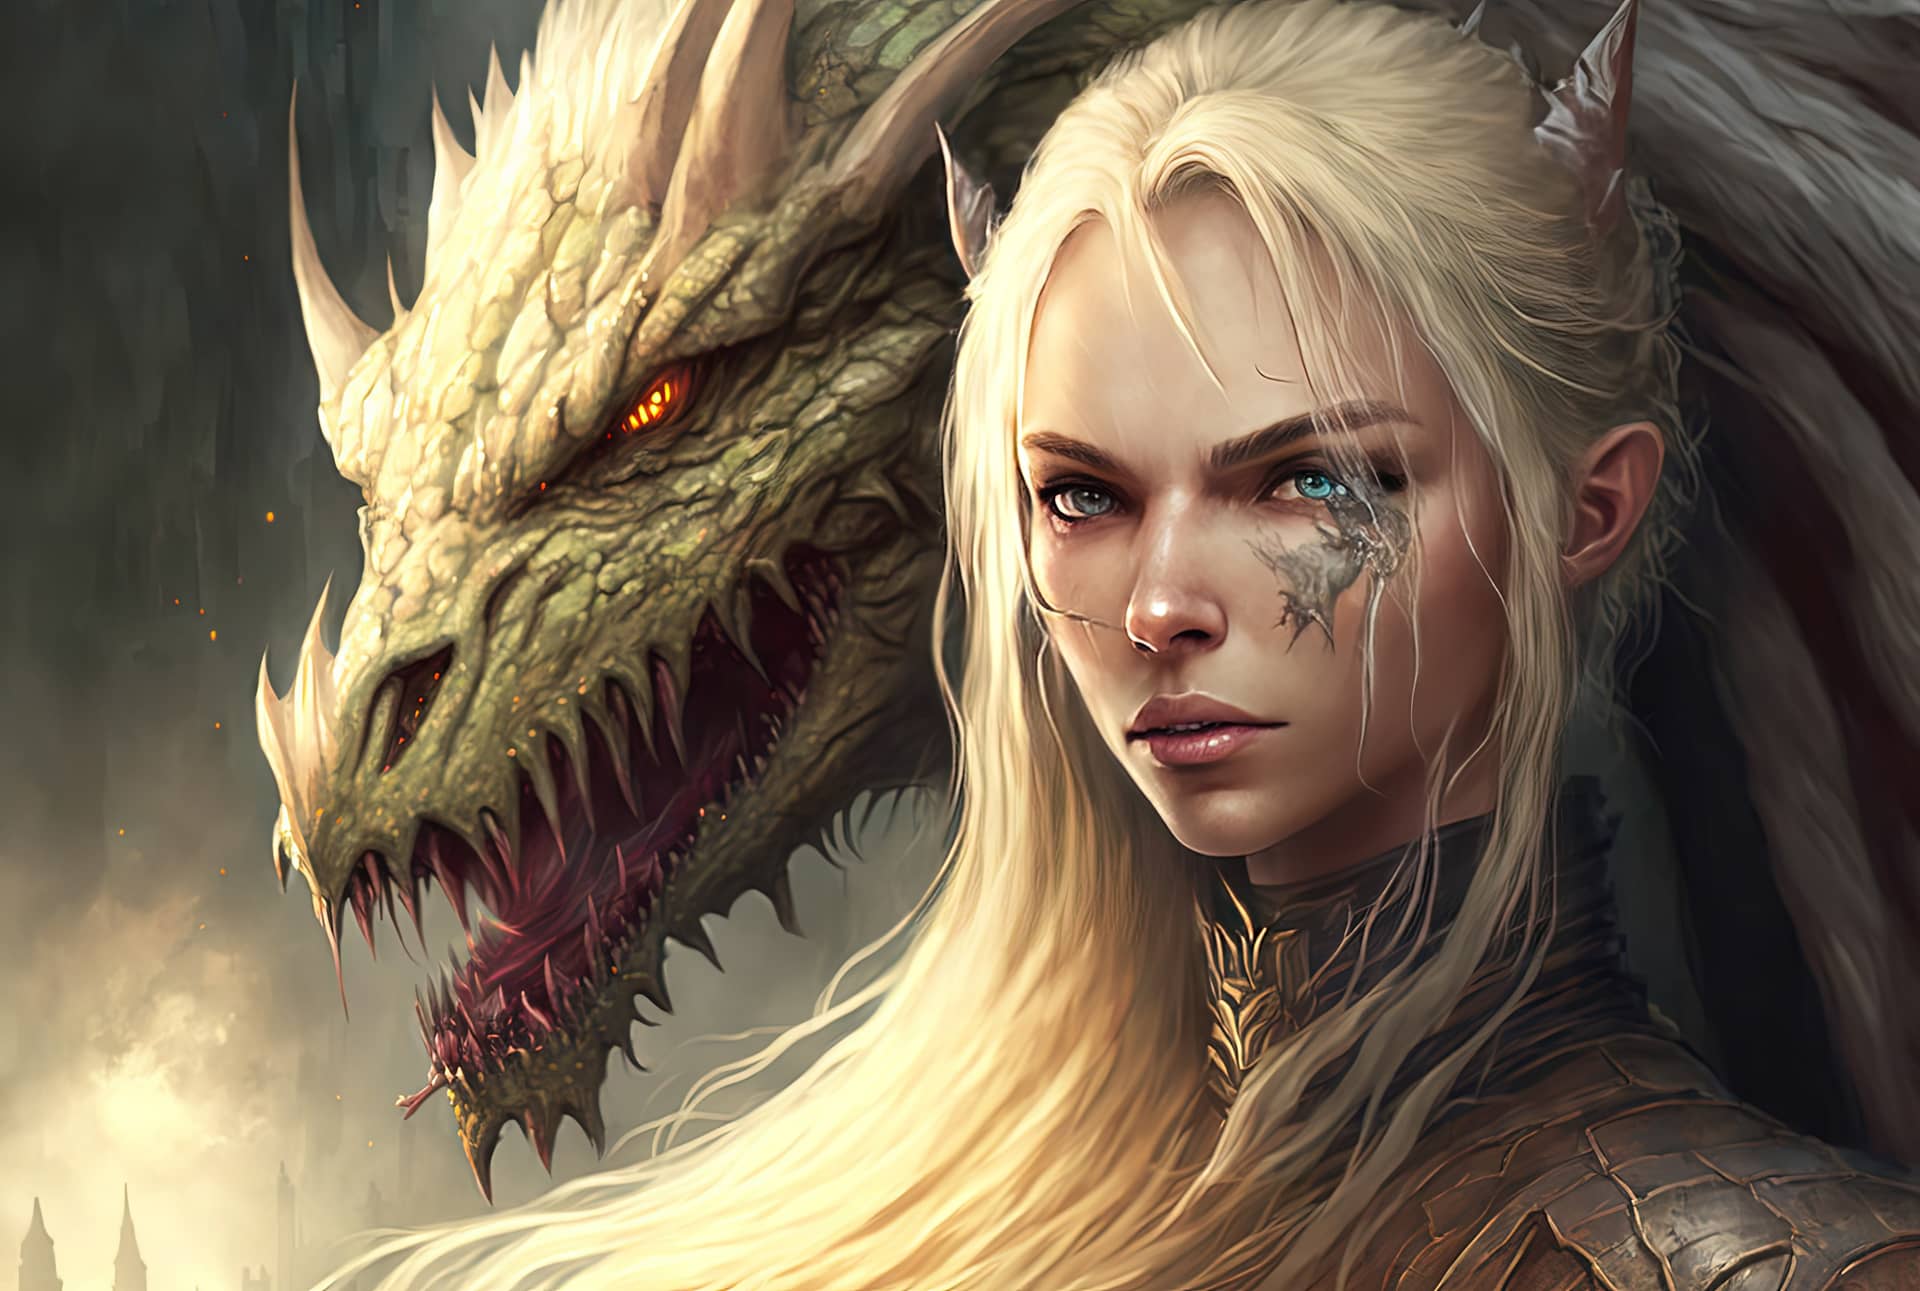 Dragon pet fantasy creature generative cool images for profile